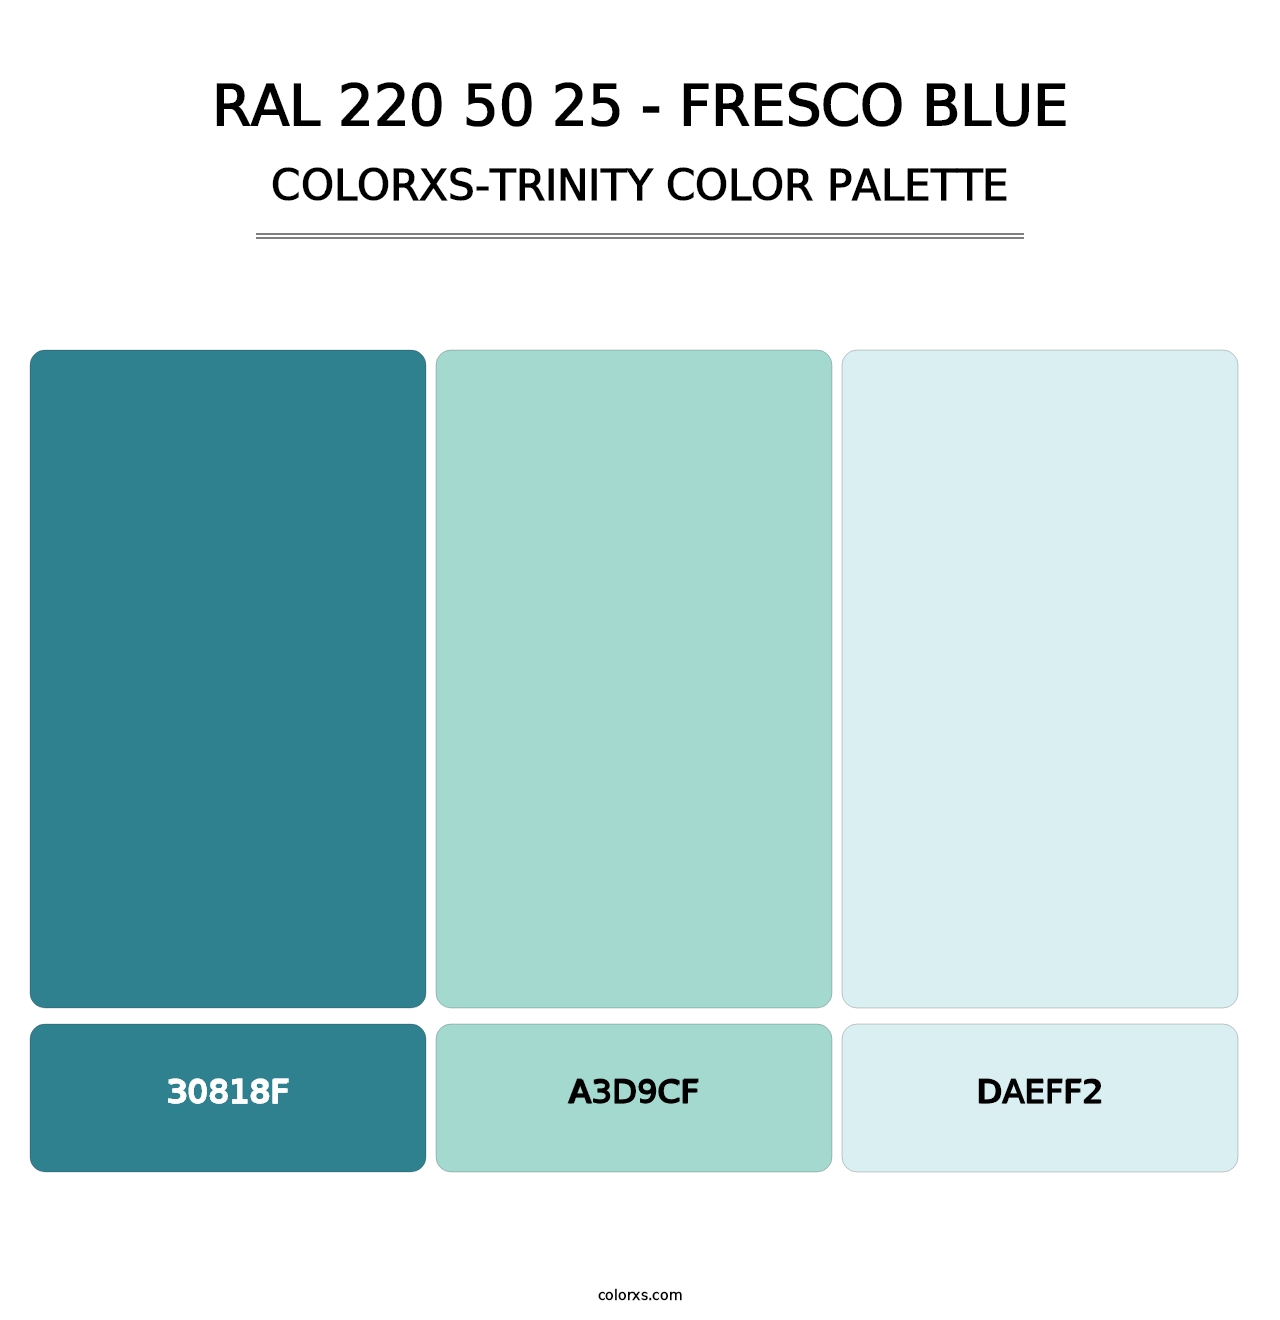 RAL 220 50 25 - Fresco Blue - Colorxs Trinity Palette